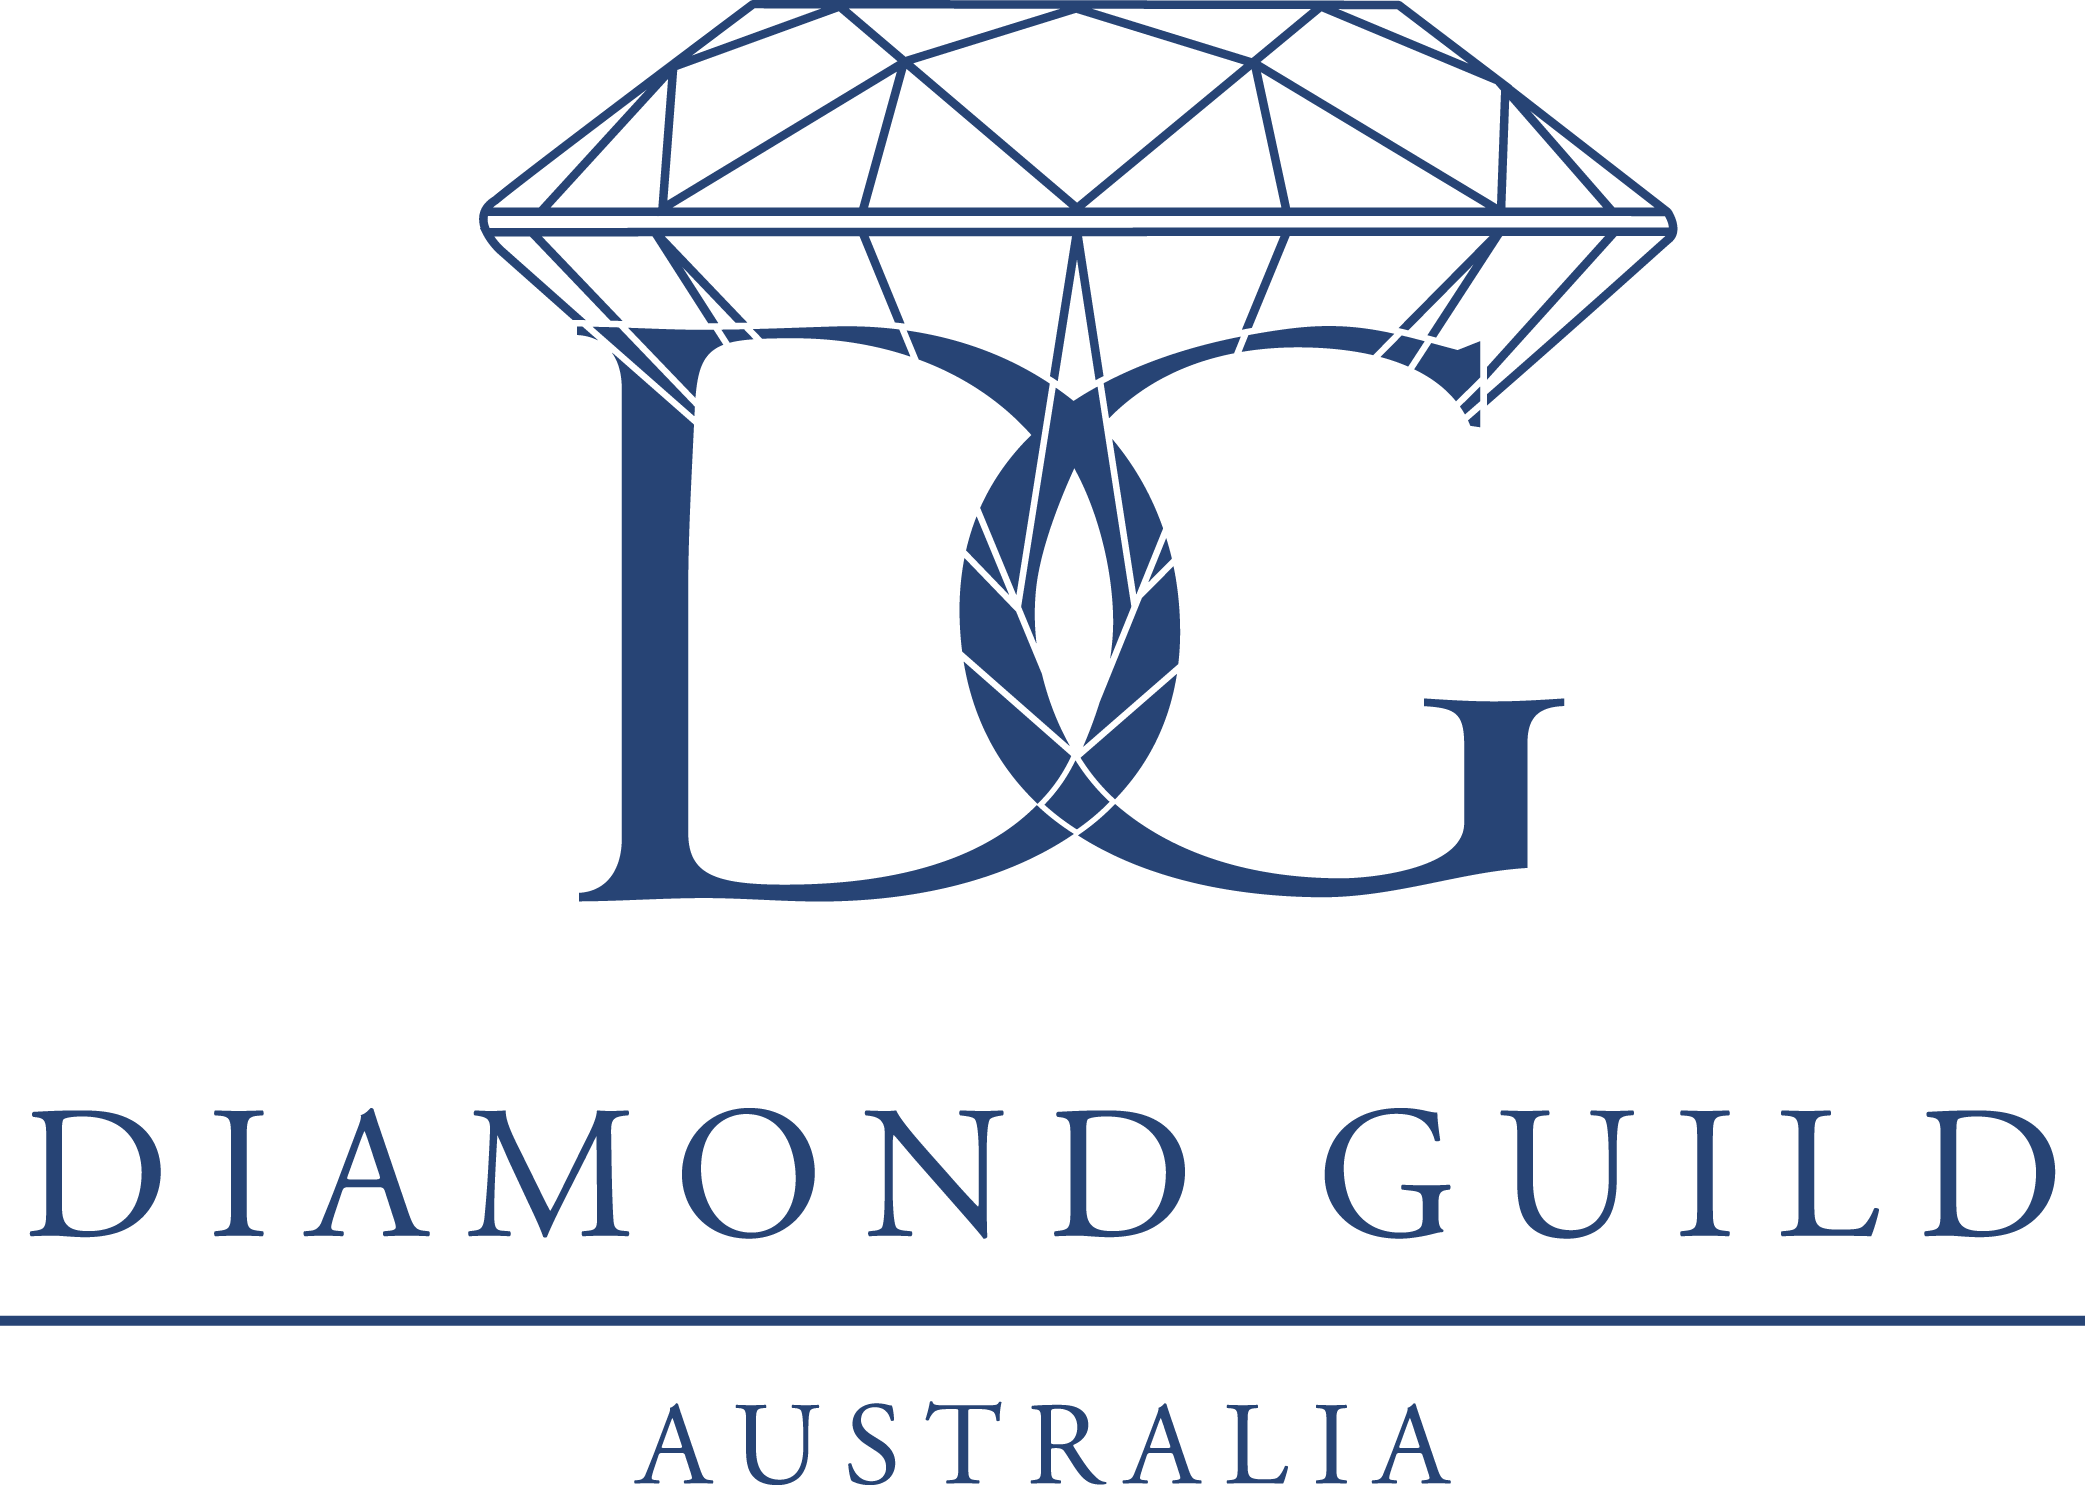 Diamond Guild Australia logo.